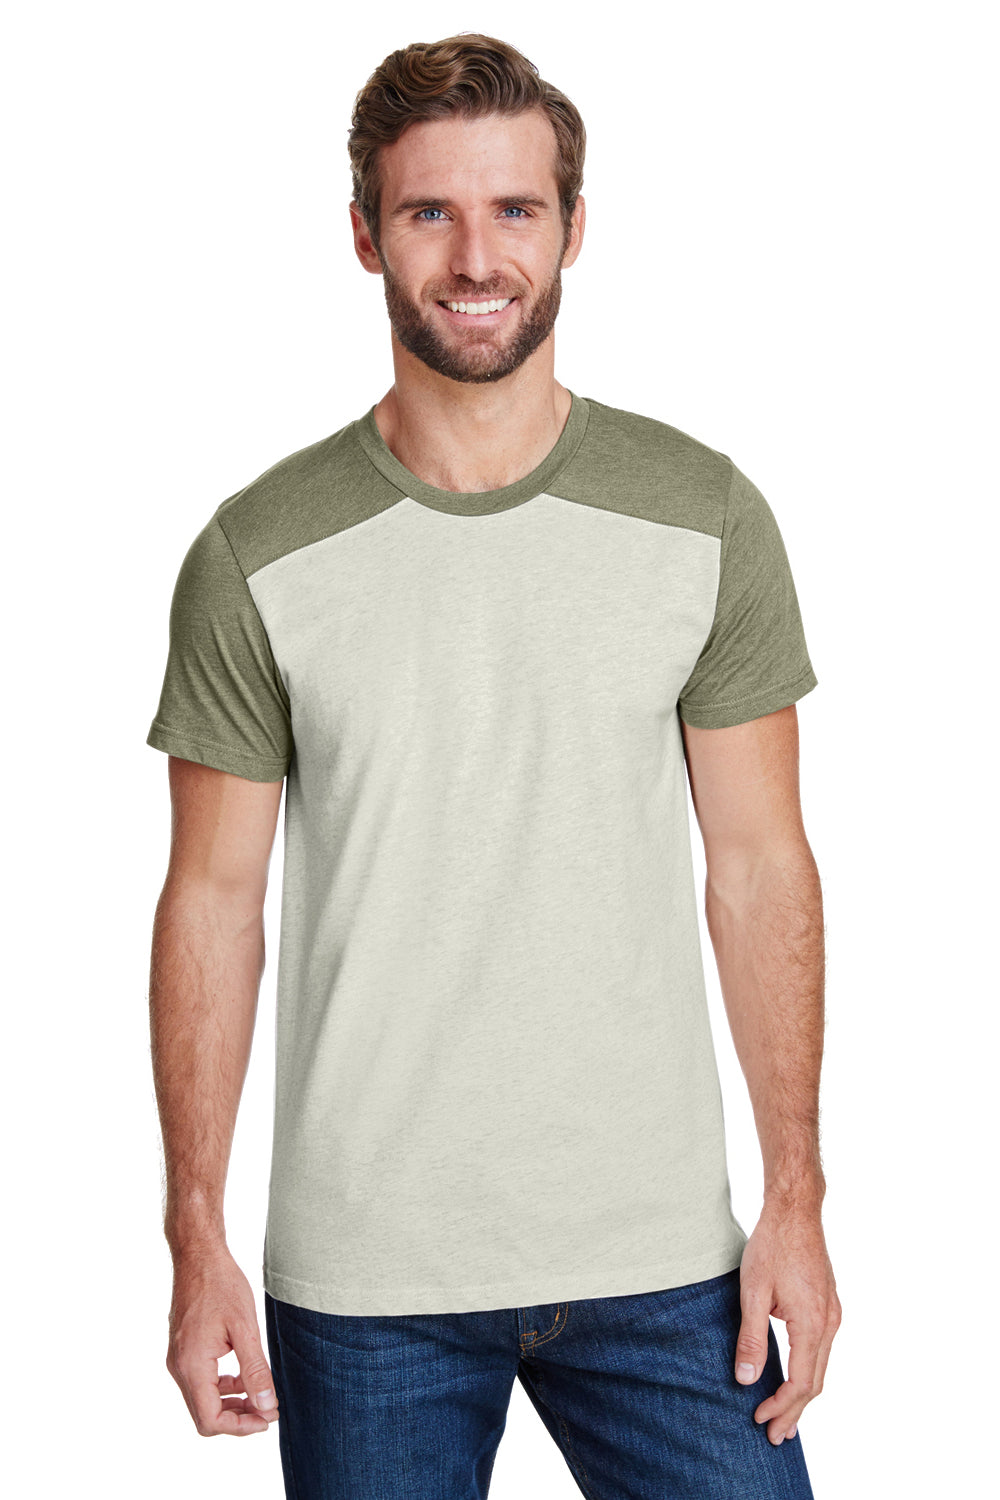 LAT LA6911 Mens Fine Jersey Forward Shoulder Short Sleeve Crewneck T-Shirt Heather Natural/Military Green Front